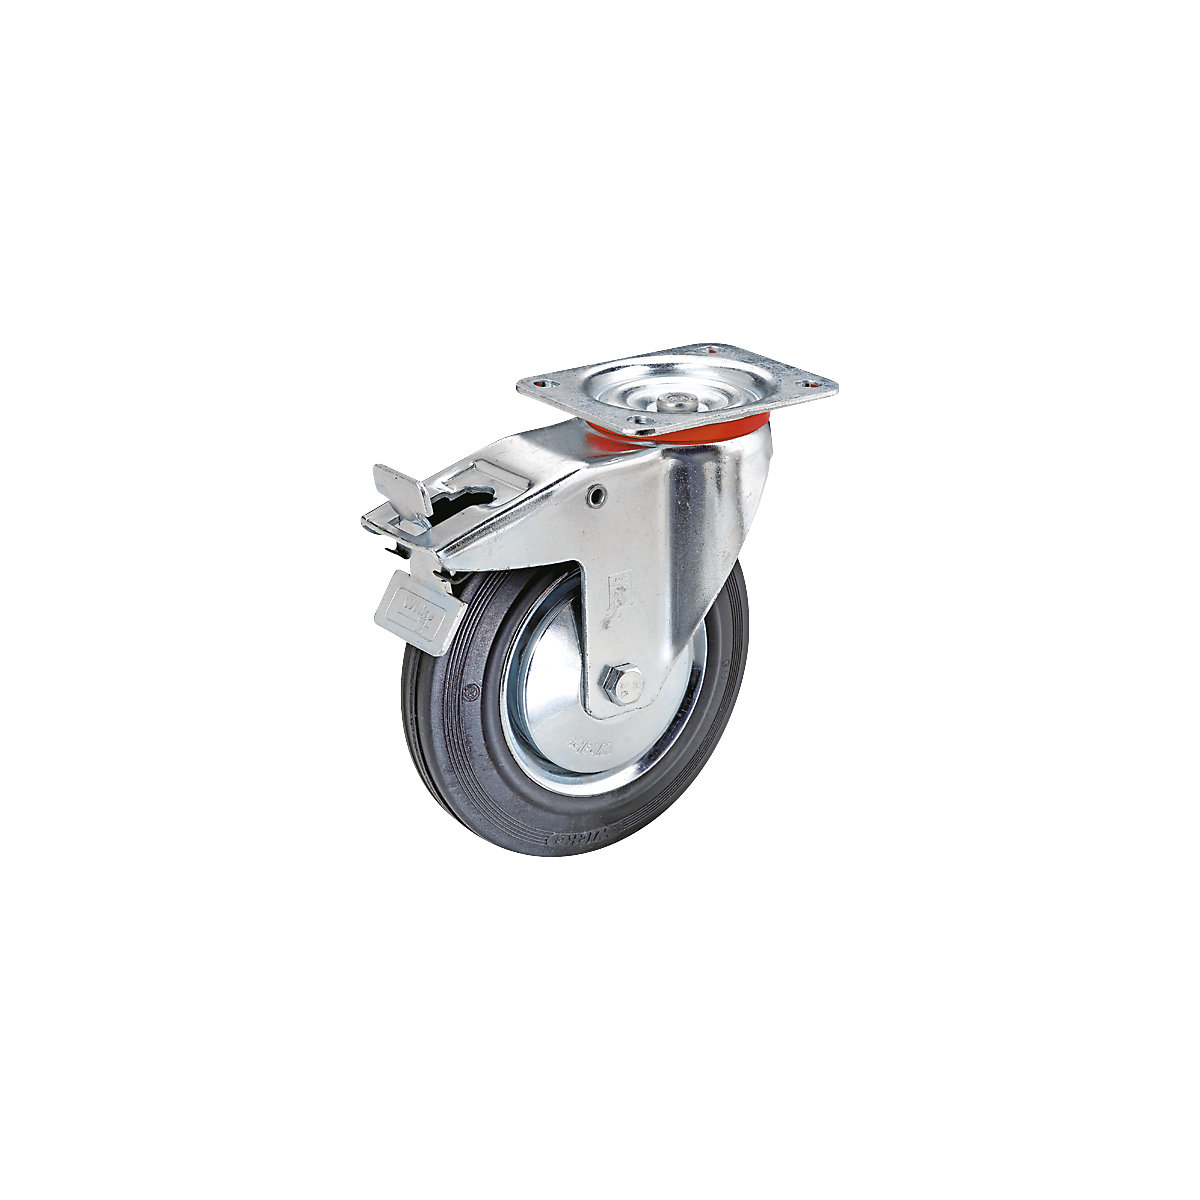 Vollgummi-Reifen auf Stahlblech-Felge, Rad-Ø x Breite 280 x 70 mm, Lenkrolle mit Doppelstopp-5